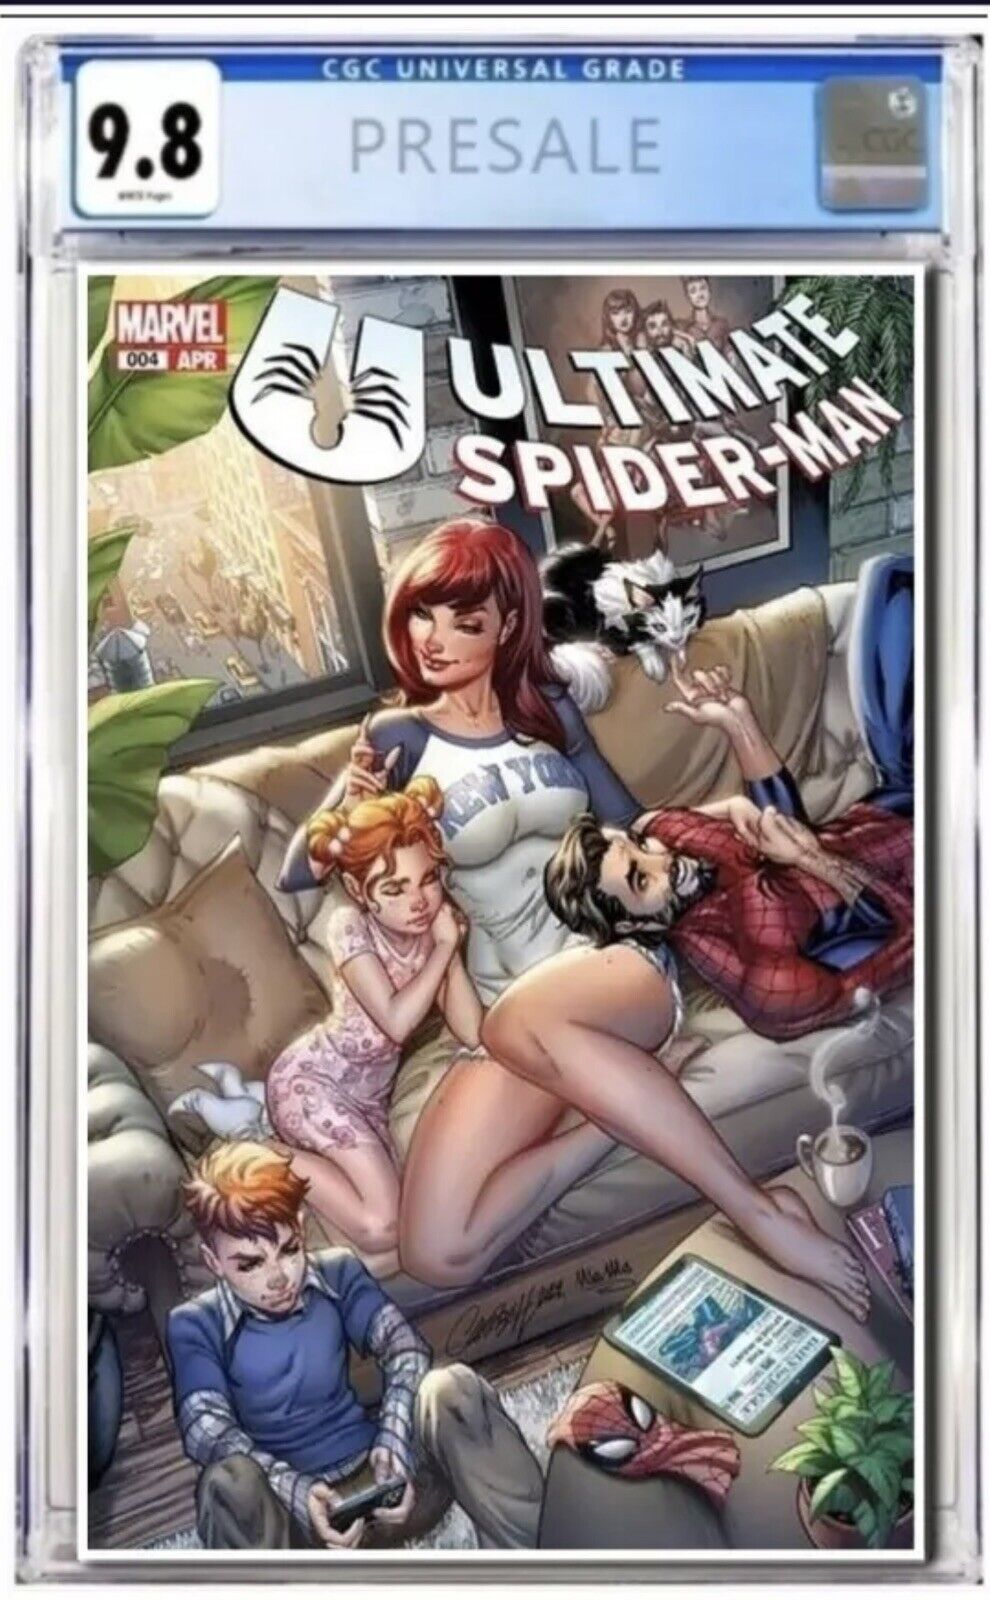 Ultimate Spider-Man #4 CGC 9.8 PRESALE J Scott Campbell Exclusive Variant